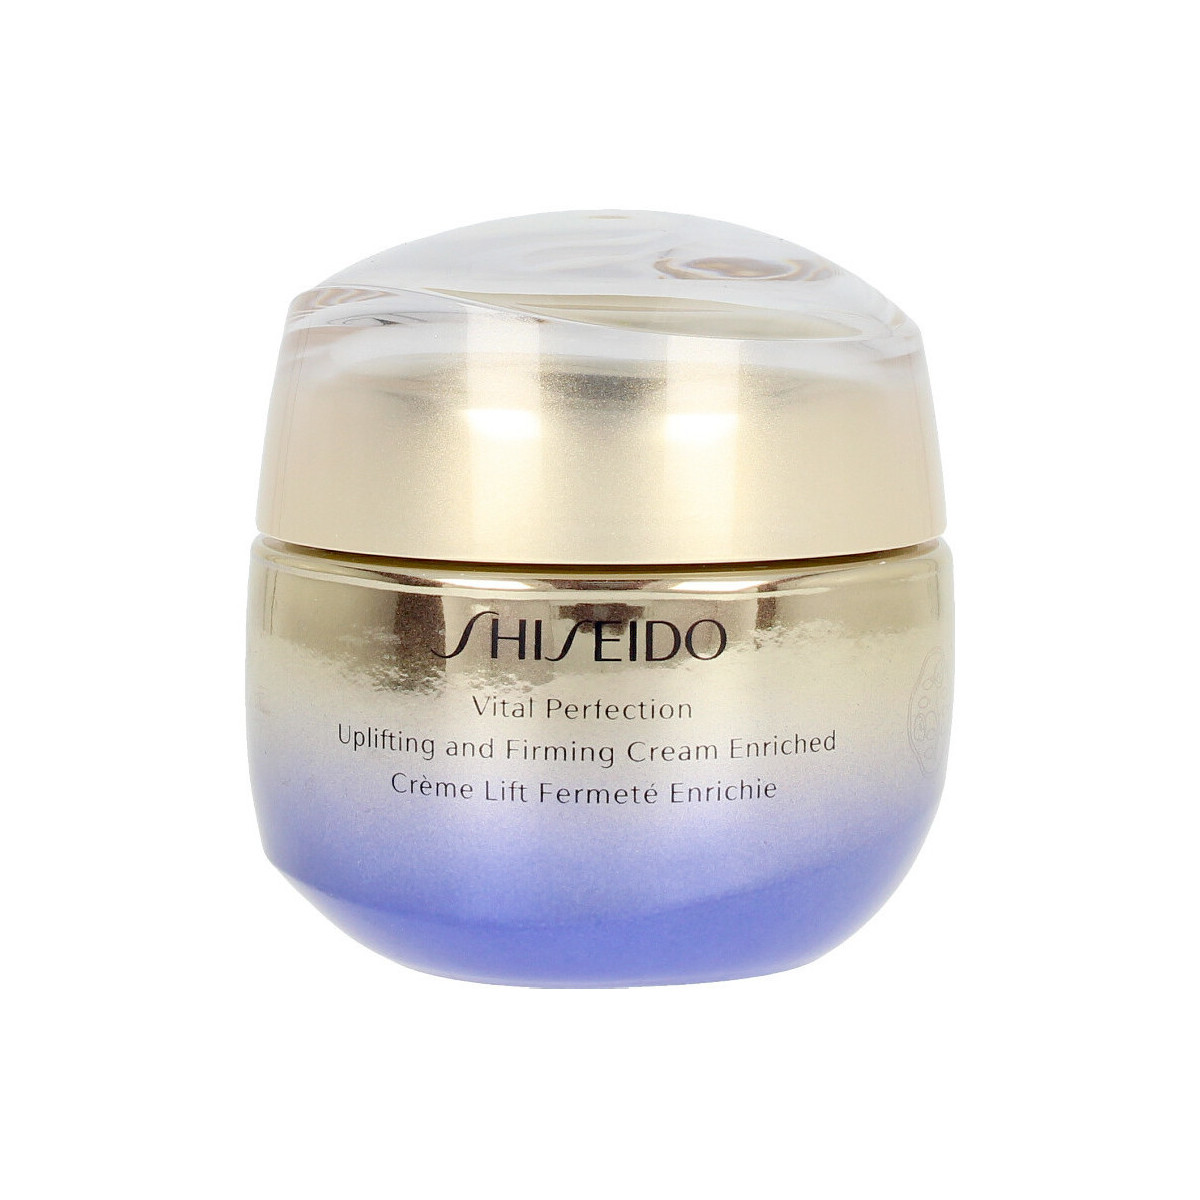 Bellezza Donna Antietà & Antirughe Shiseido Vital Perfection Uplifting & Firming Cream Enriched 